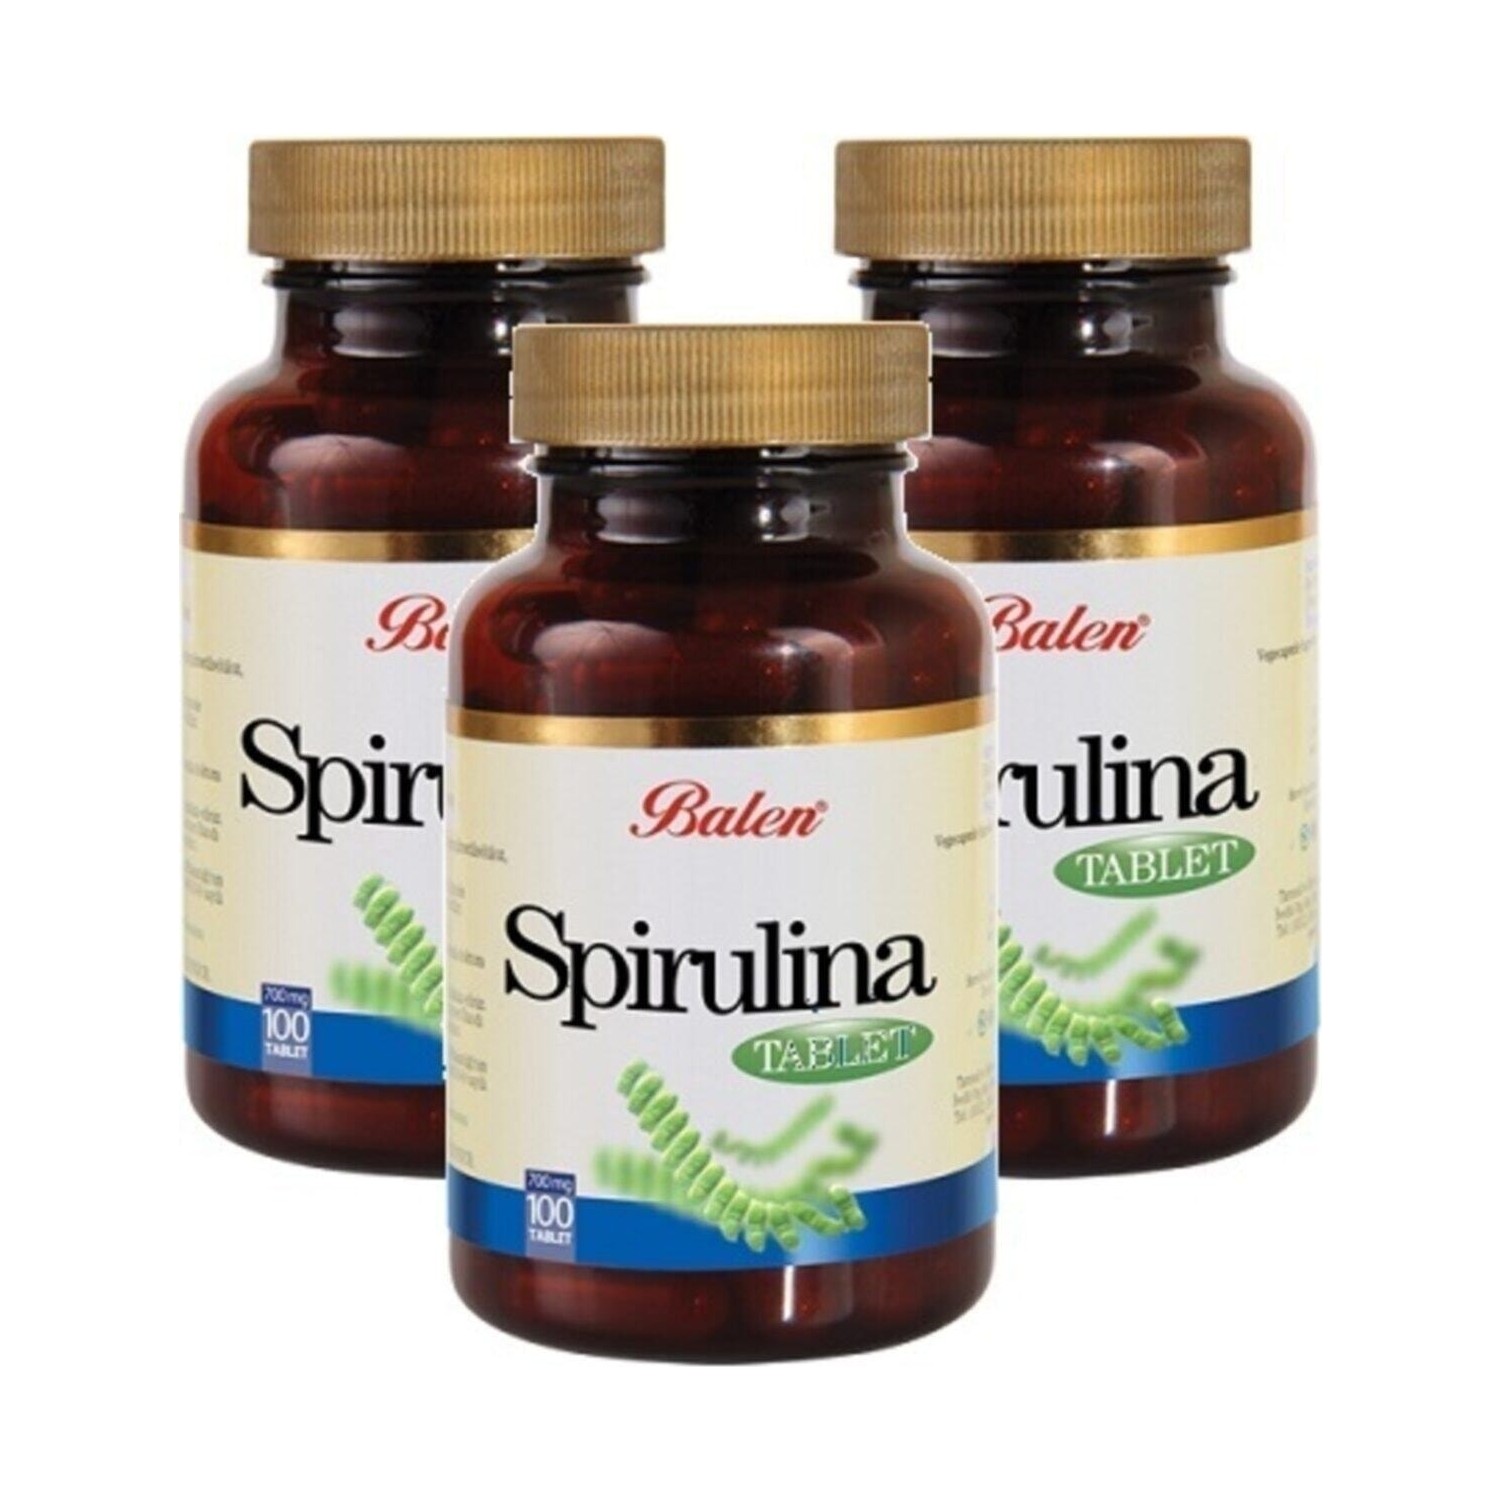 Пищевая добавка Balen спирулина 700 мг, 3 упаковки по 100 капсул laperva amino tablets 7500 mg 300 tablets